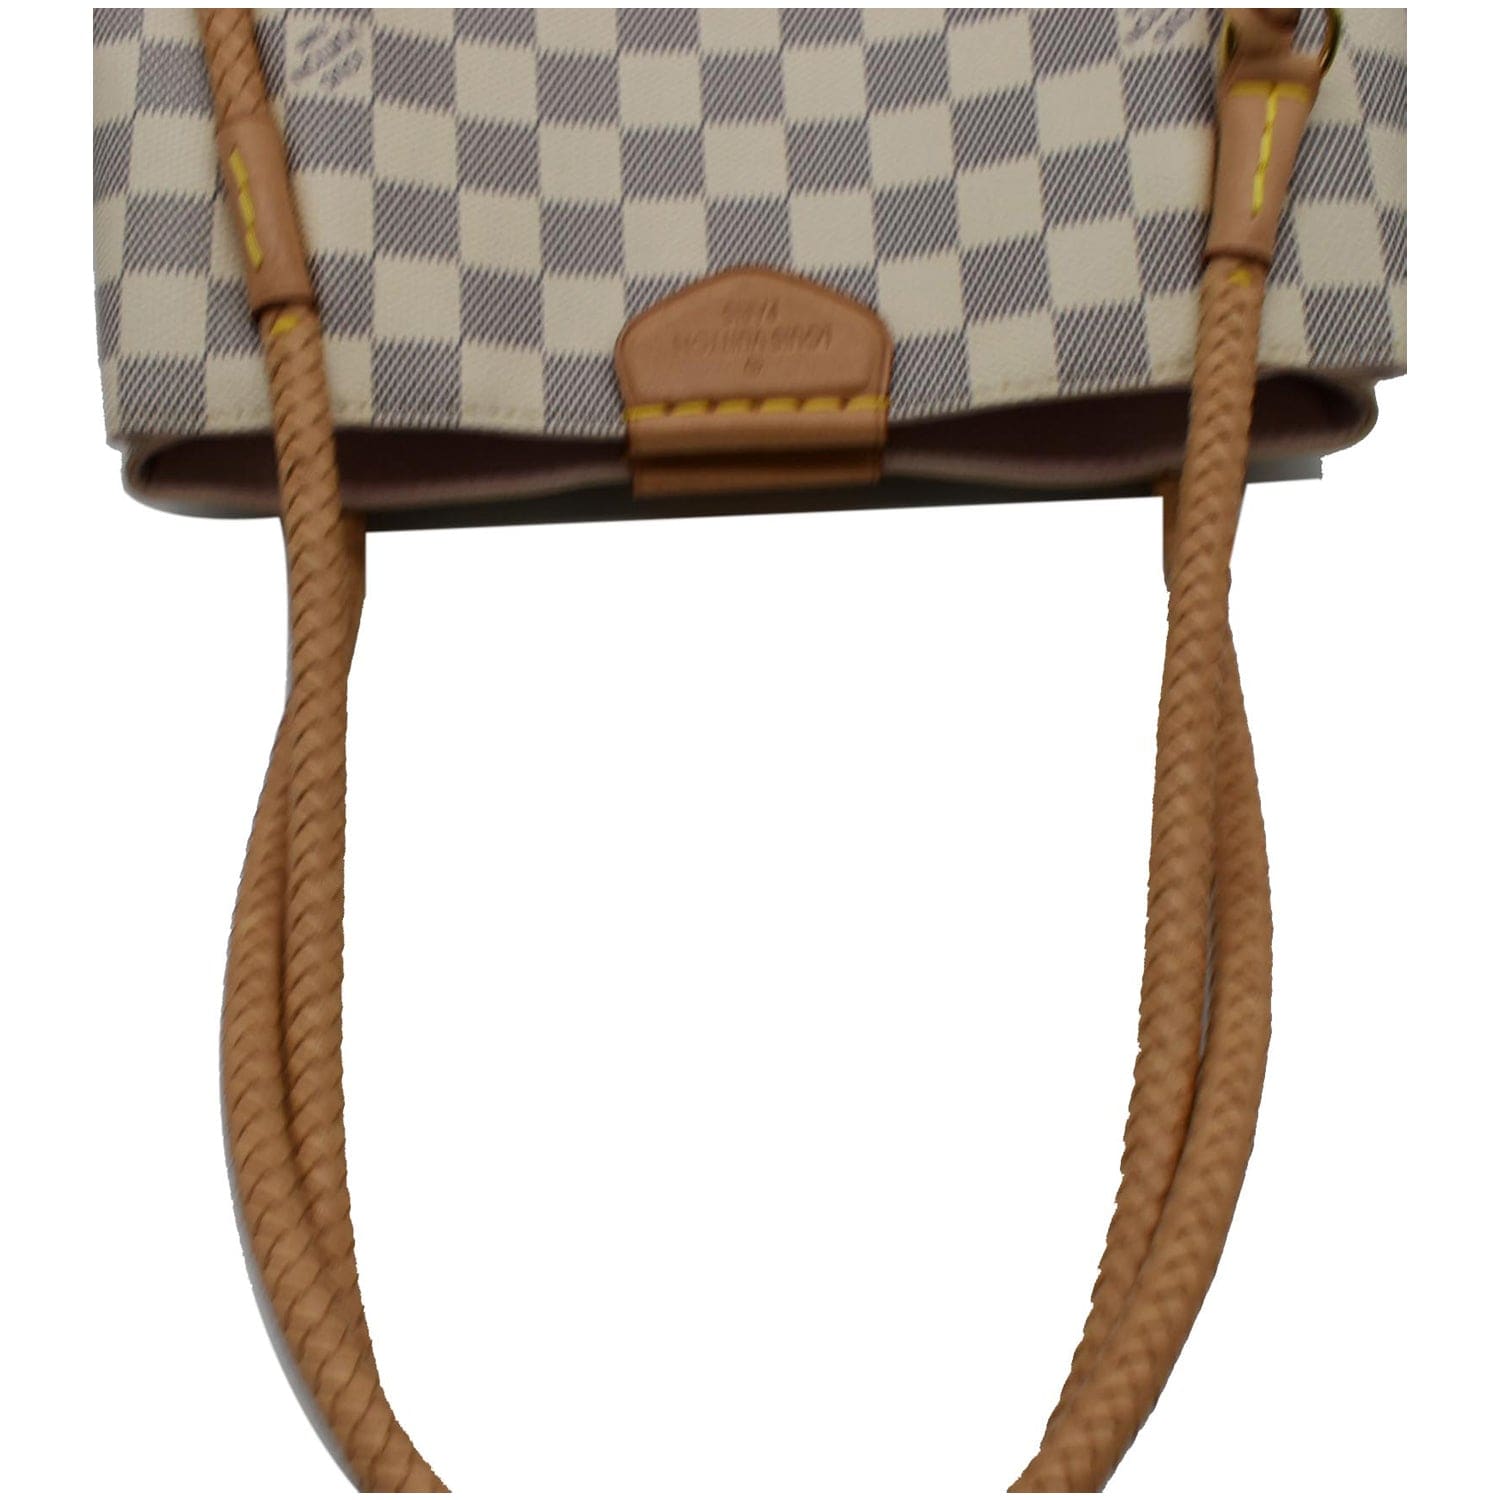 Louis-Vuitton-Damier-Azur-Propriano-Shoulder-Bag-N44027 – dct-ep_vintage  luxury Store